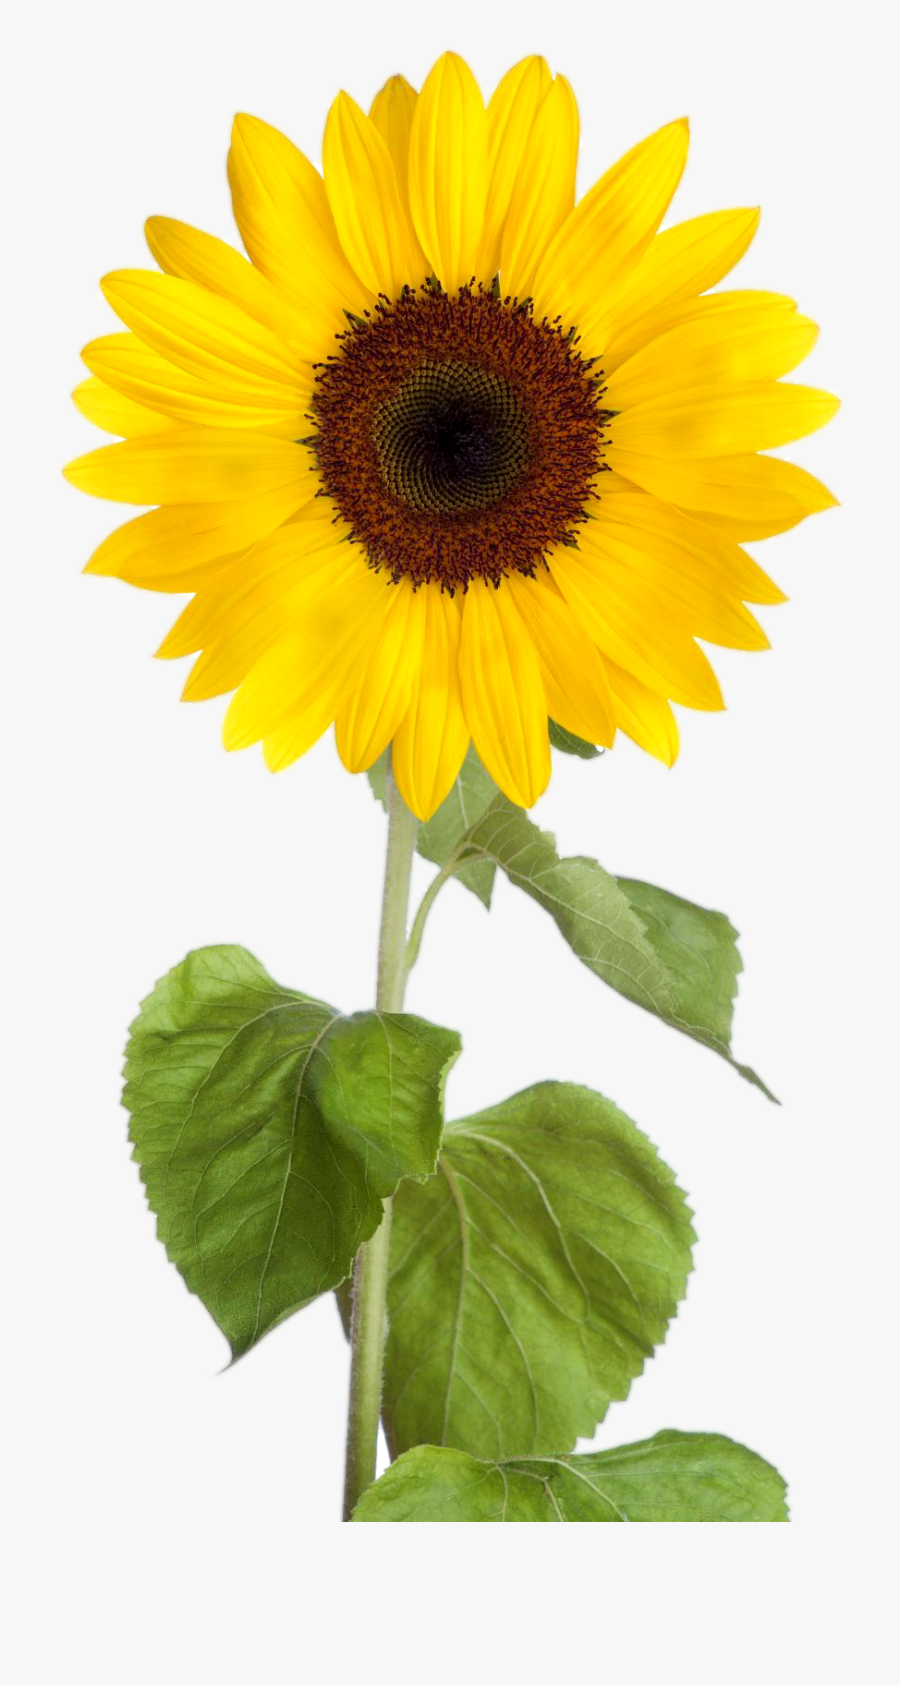 Sunflower Clipart - Sunflower Clipart Transparent Background, Transparent Clipart